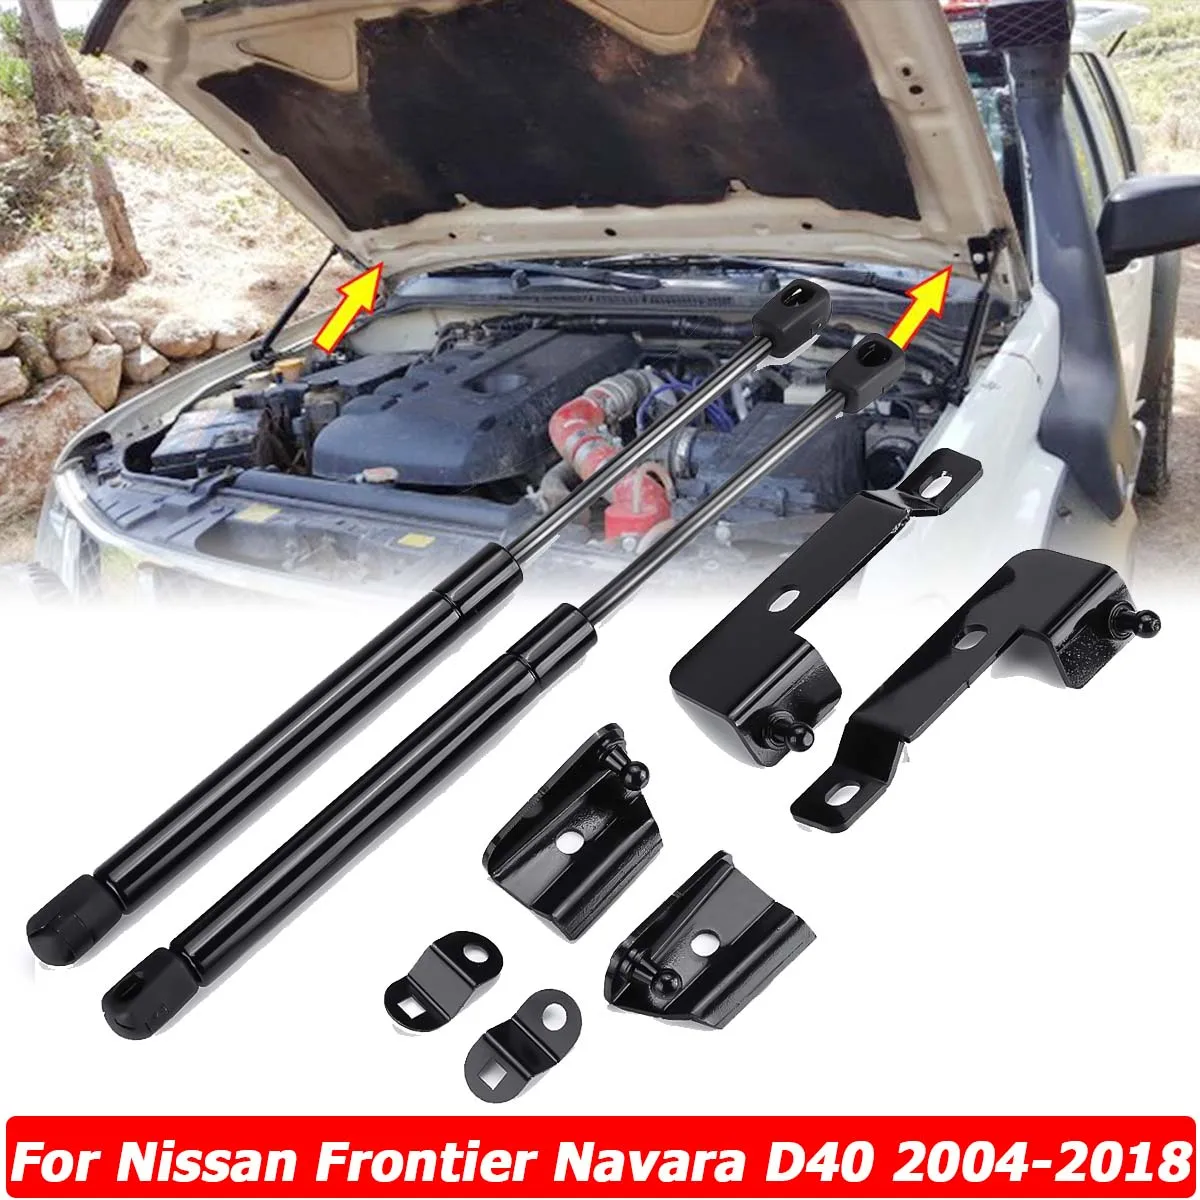 2X Front Engine Bonnet Hood ShockGas Struts Bar Spring Lift Support For Nissan Frontier Navara D40 2004-2018 Car Accessories